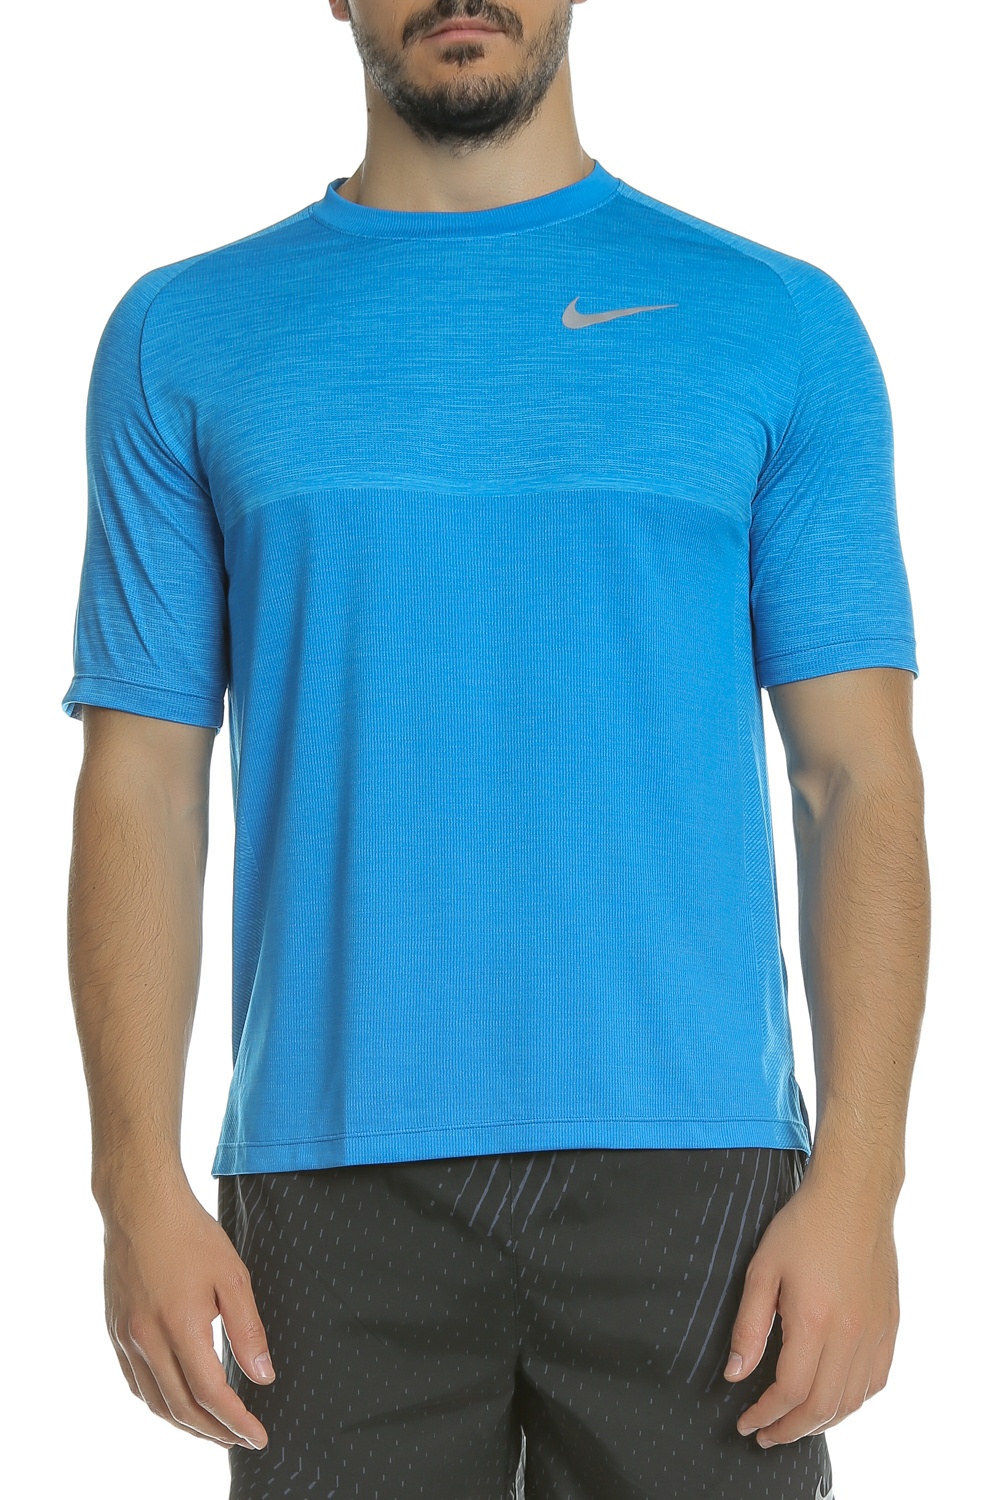 NIKE - Ανδρική κοντομάνικη μπλούζα Nike DRY MEDALIST TOP SS μπλε Ανδρικά/Ρούχα/Αθλητικά/T-shirt